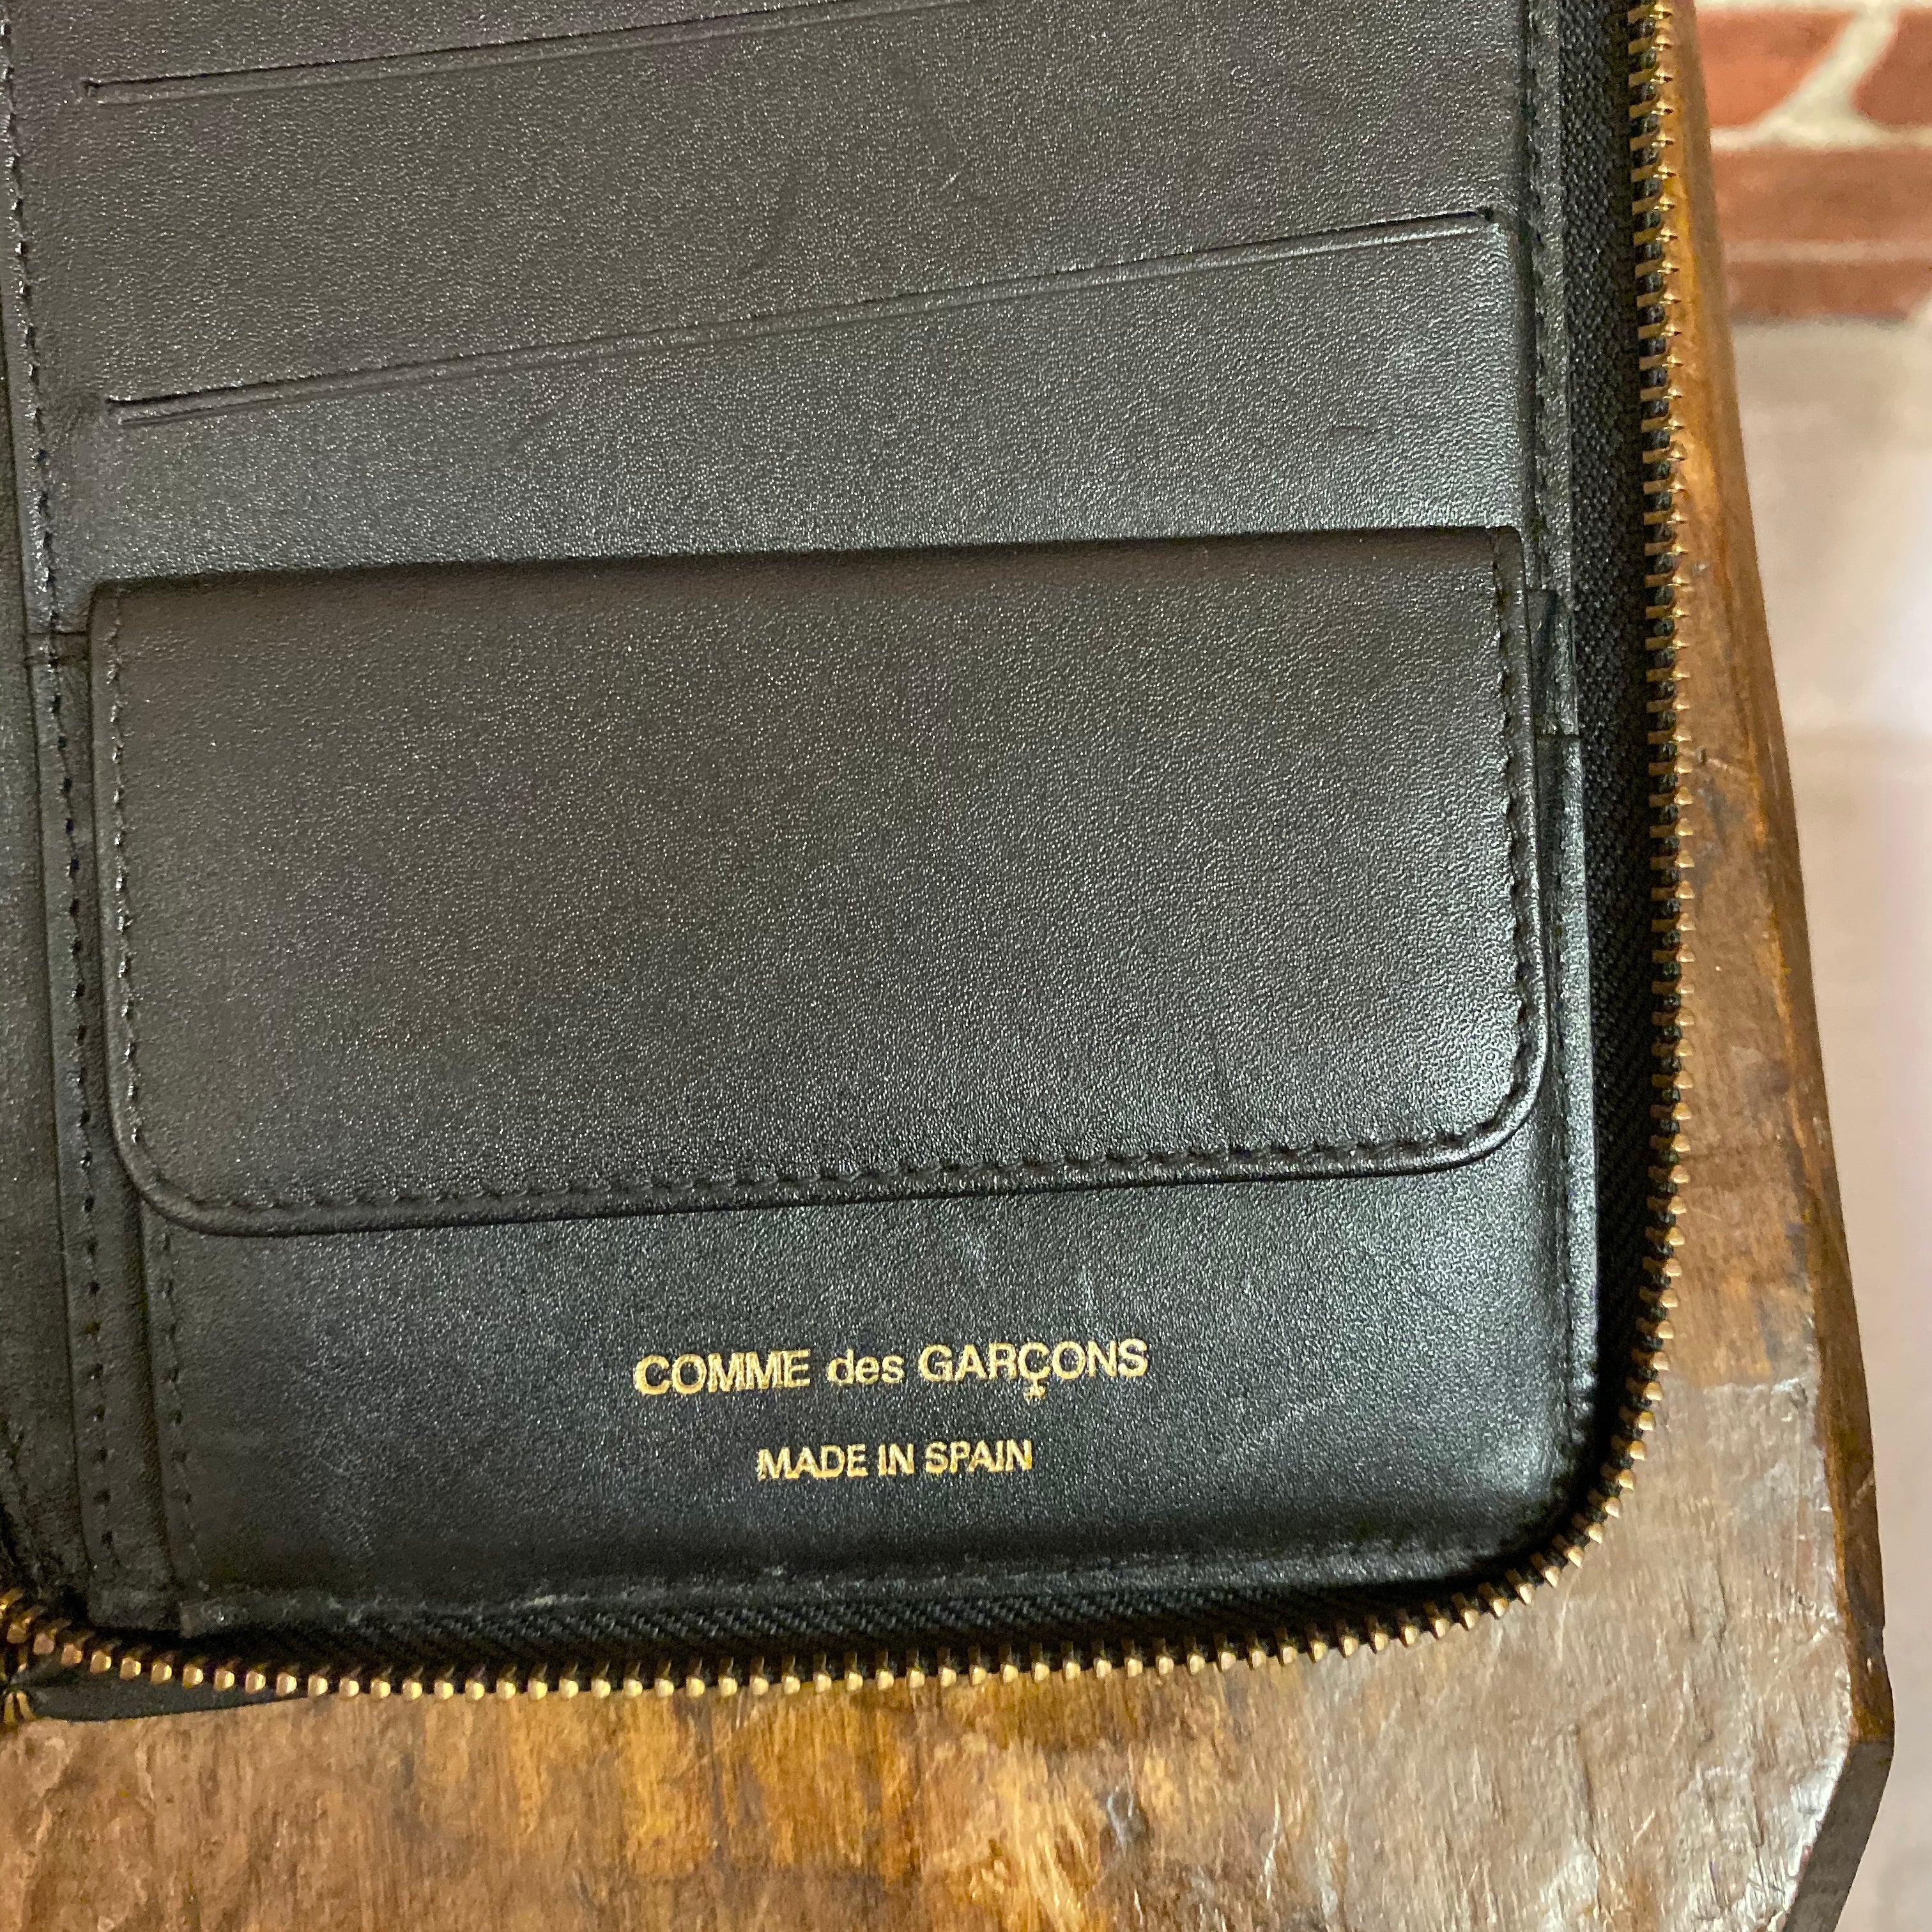 COMME DES GARCONS textured leather pouch